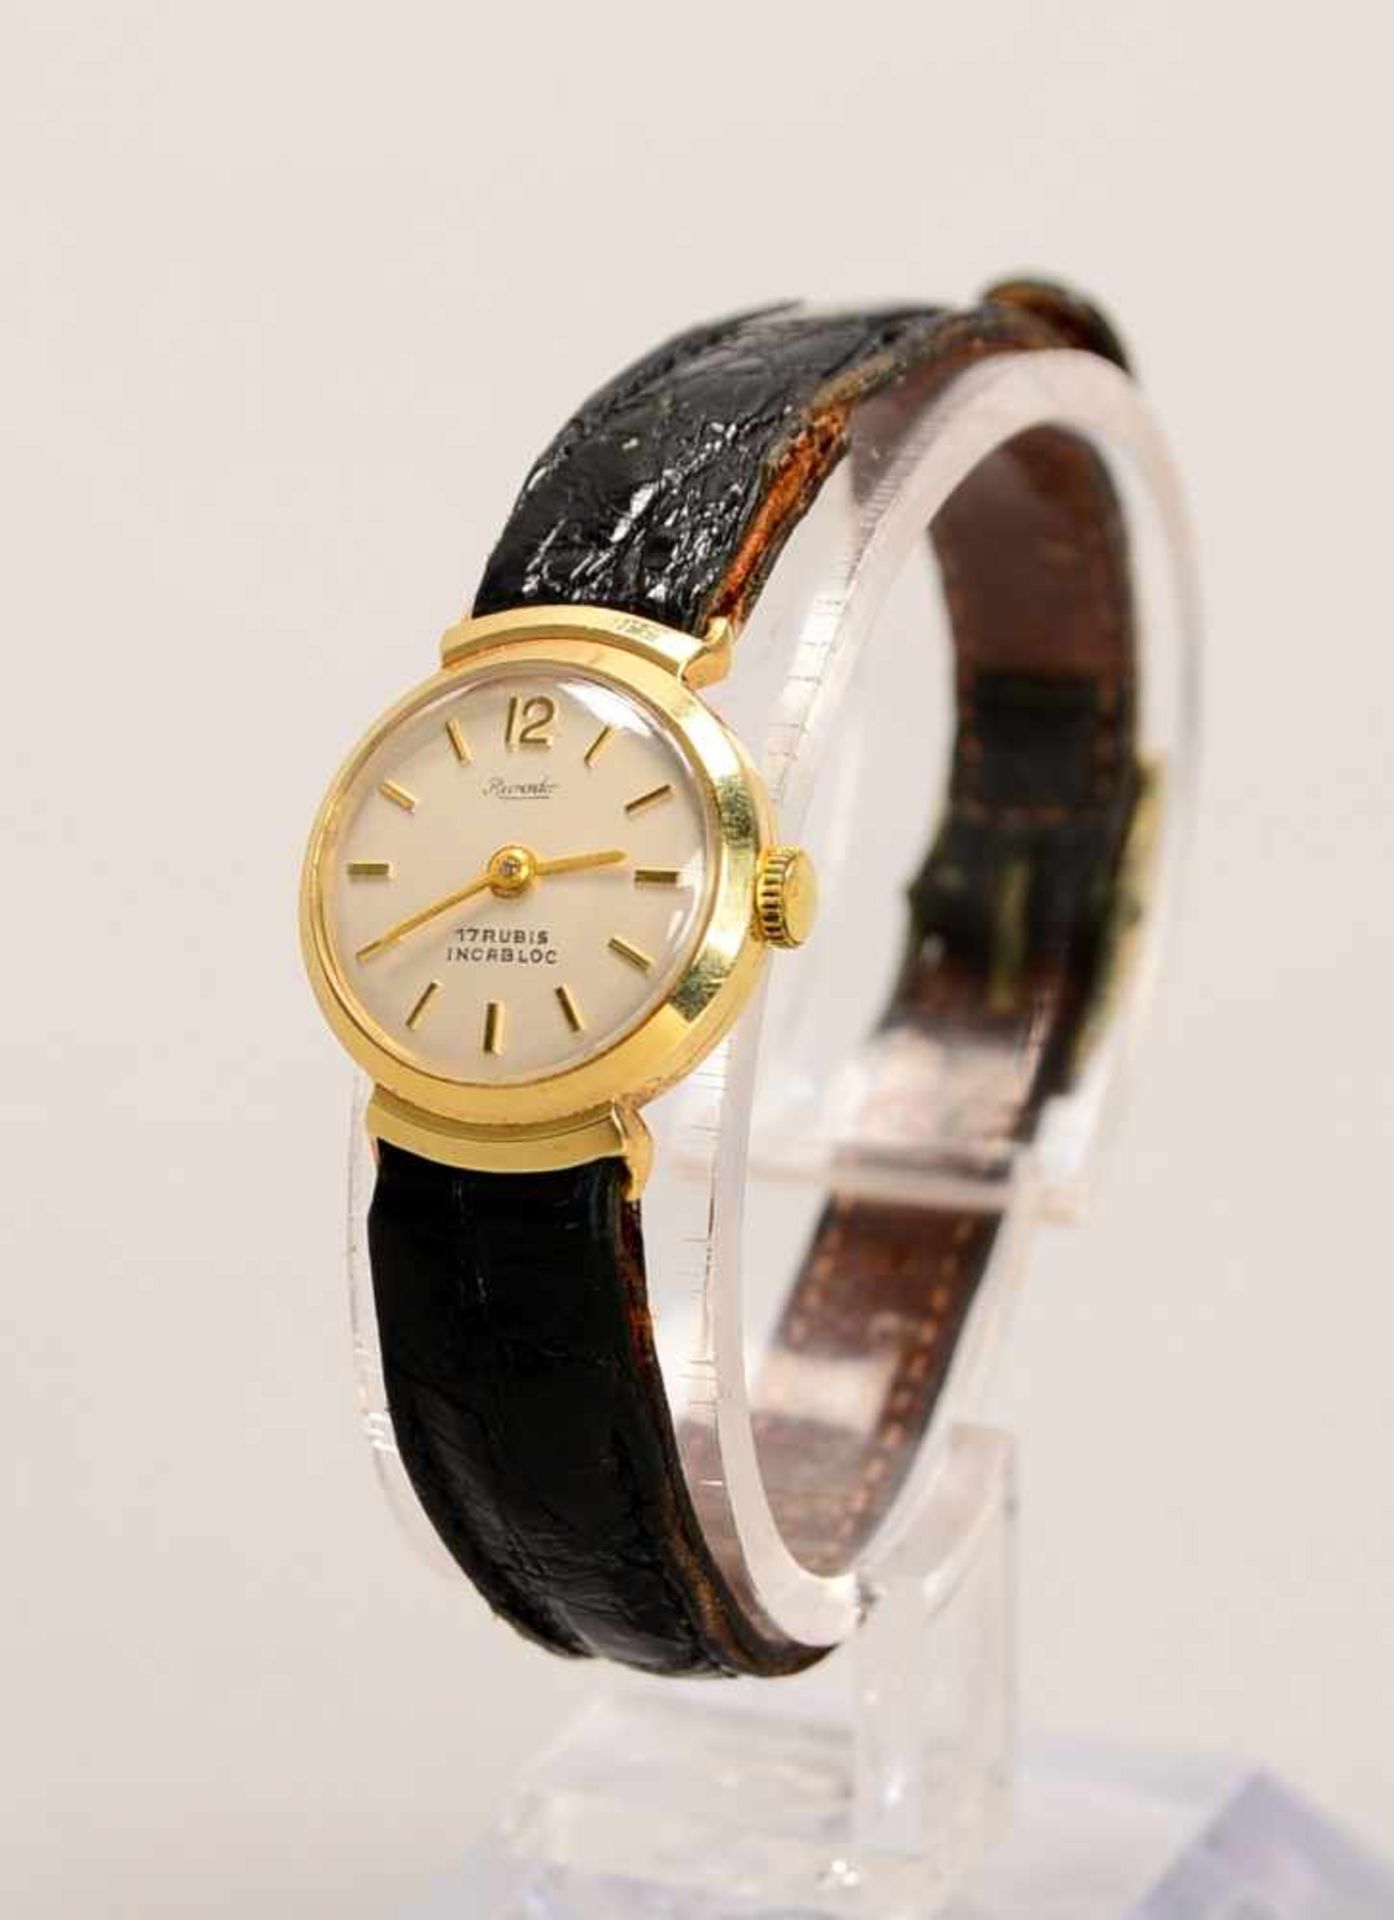 Damen-Armbanduhr, Rivado, 585 GG-Gehäuse, Uhr läuft an, mit Lederarmband in Kroko-Prägung; - Bild 2 aus 2